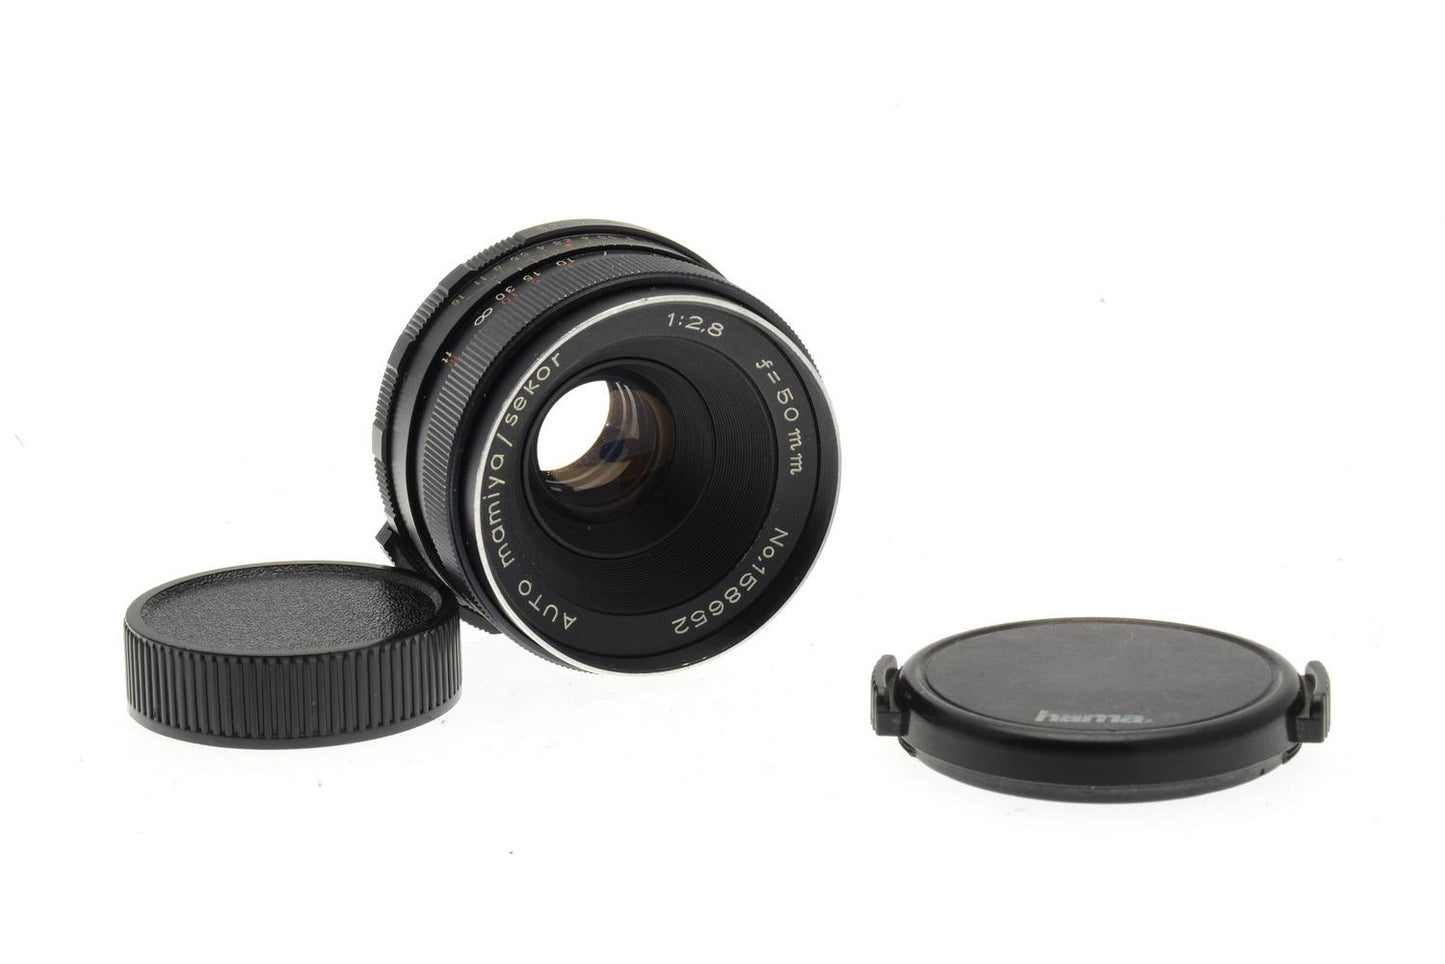 Mamiya 50mm f2.8 Sekor Auto - Lens